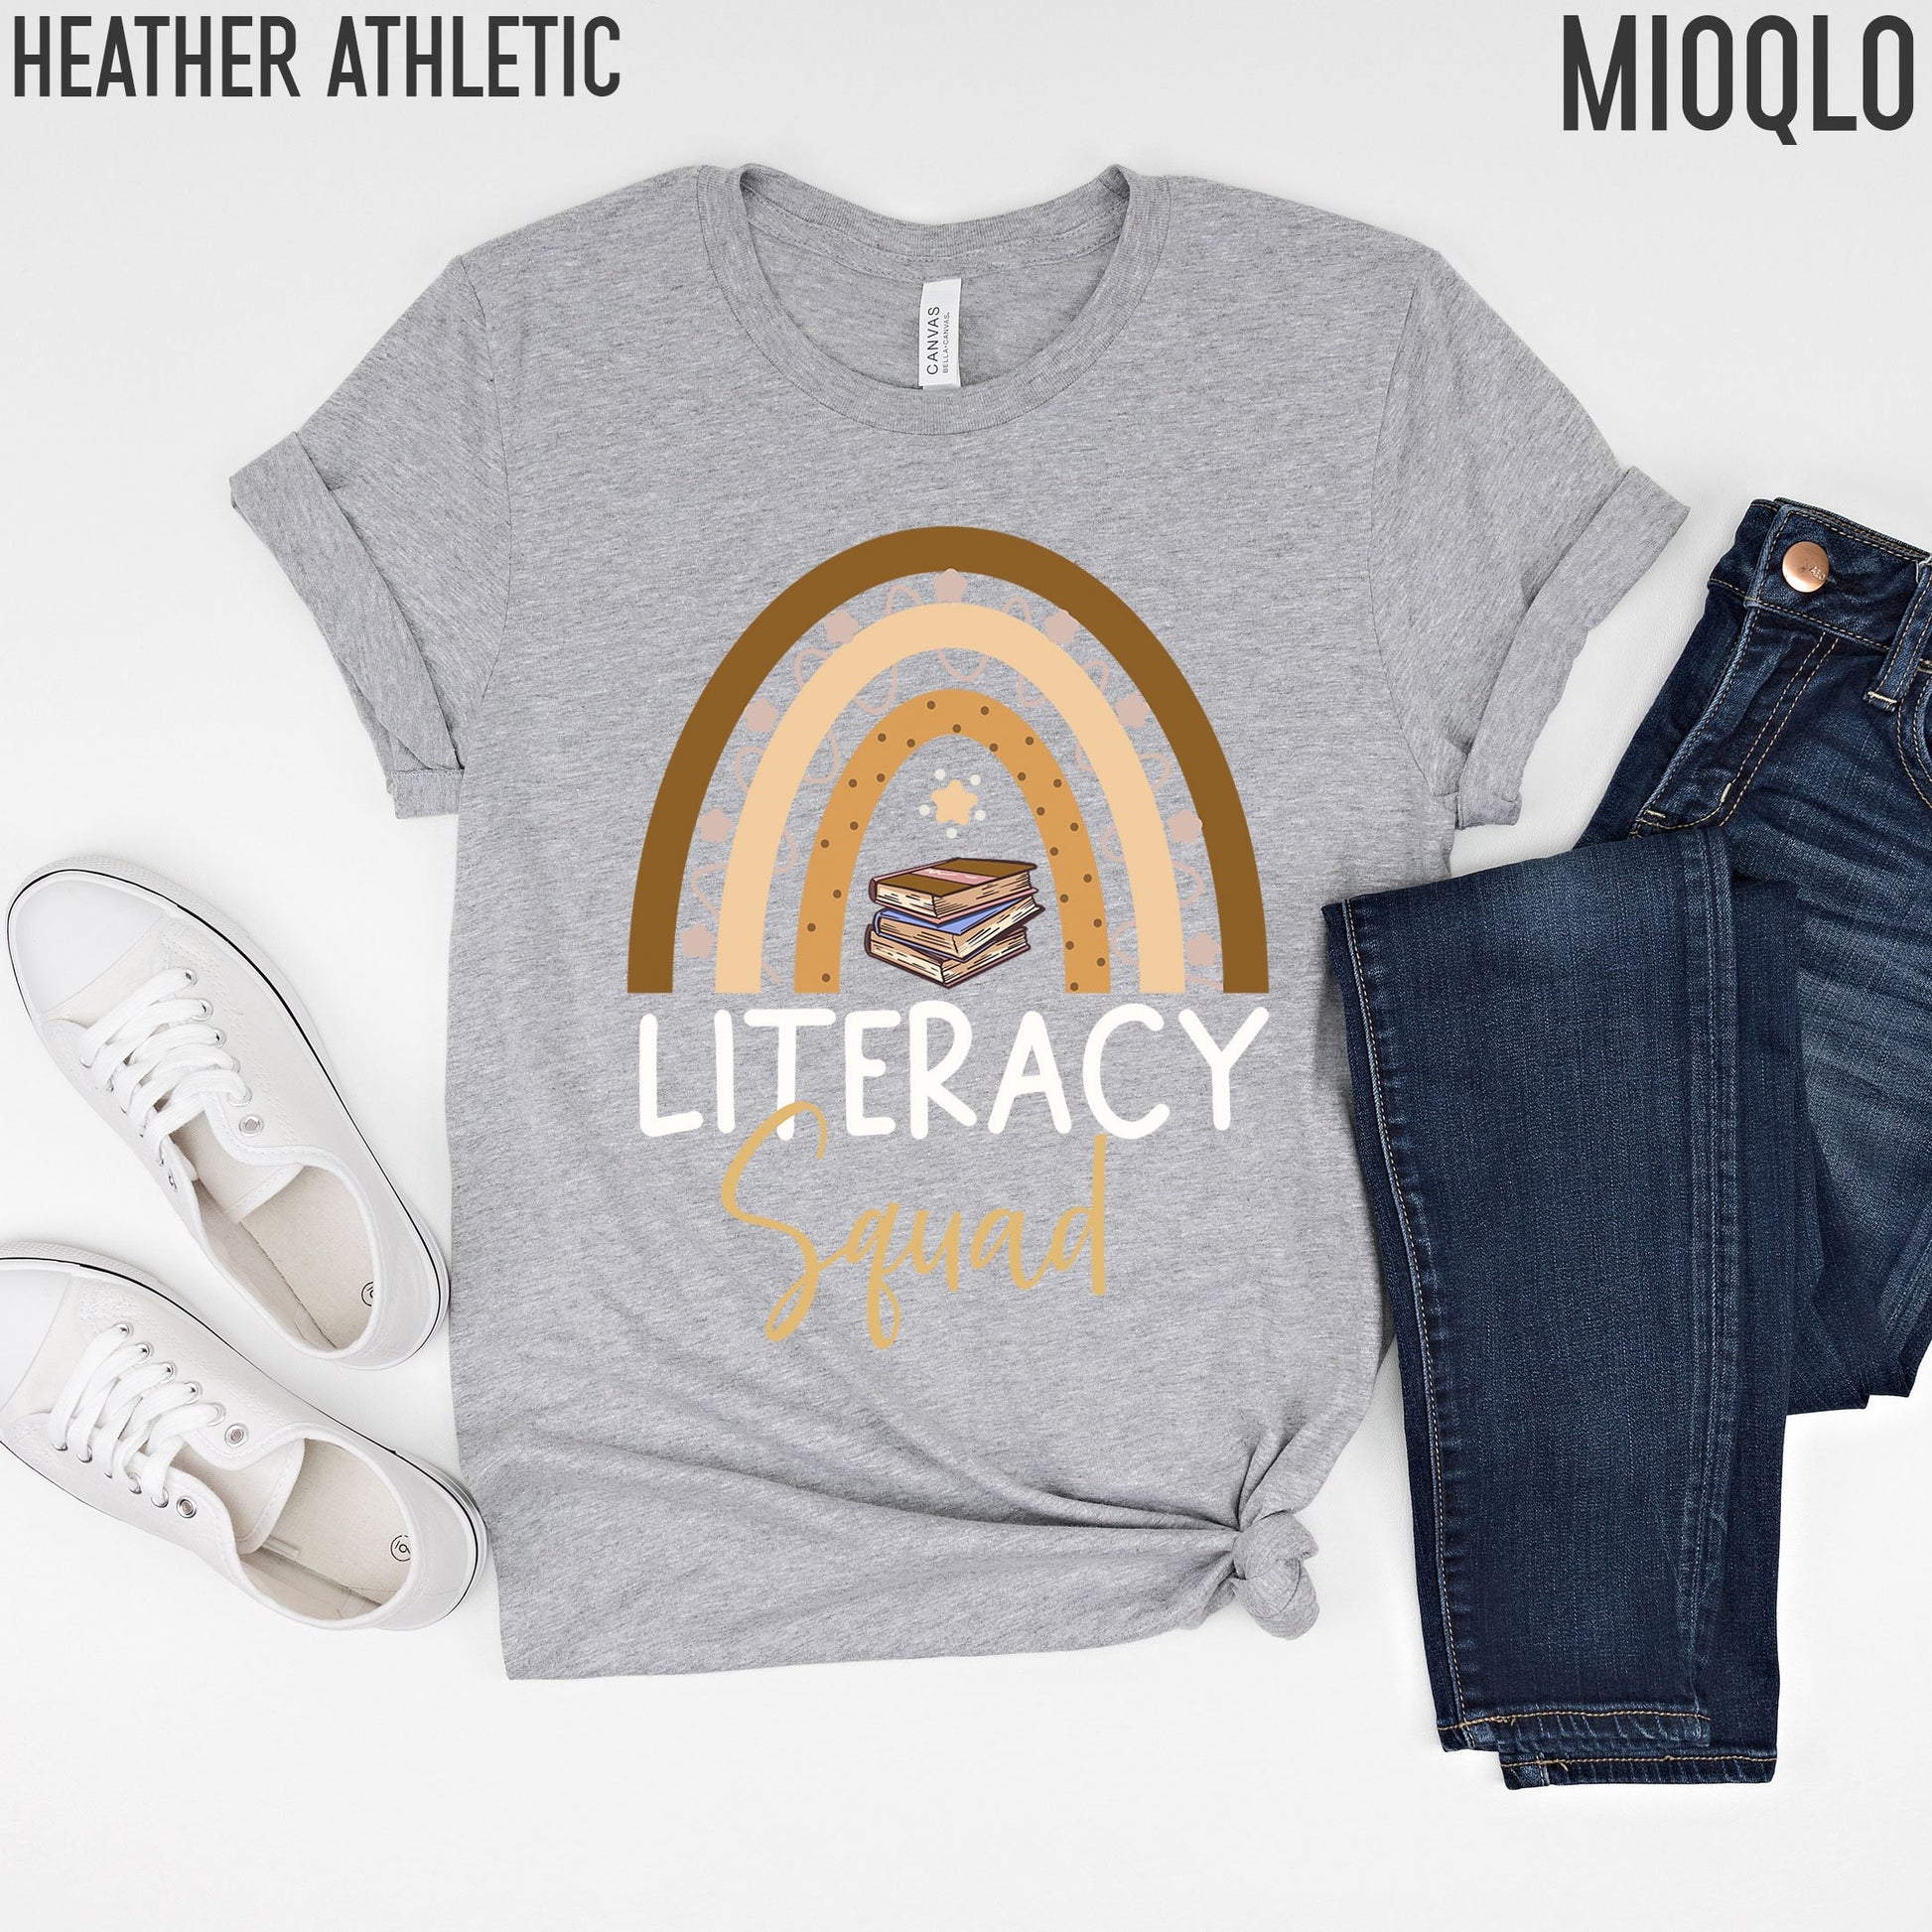 Literacy Squad Shirt, Literacy Coach, Reading Coach, Literacy Teacher Elementary School Tee, School Literacy Coach, Librarian, Library Shirt